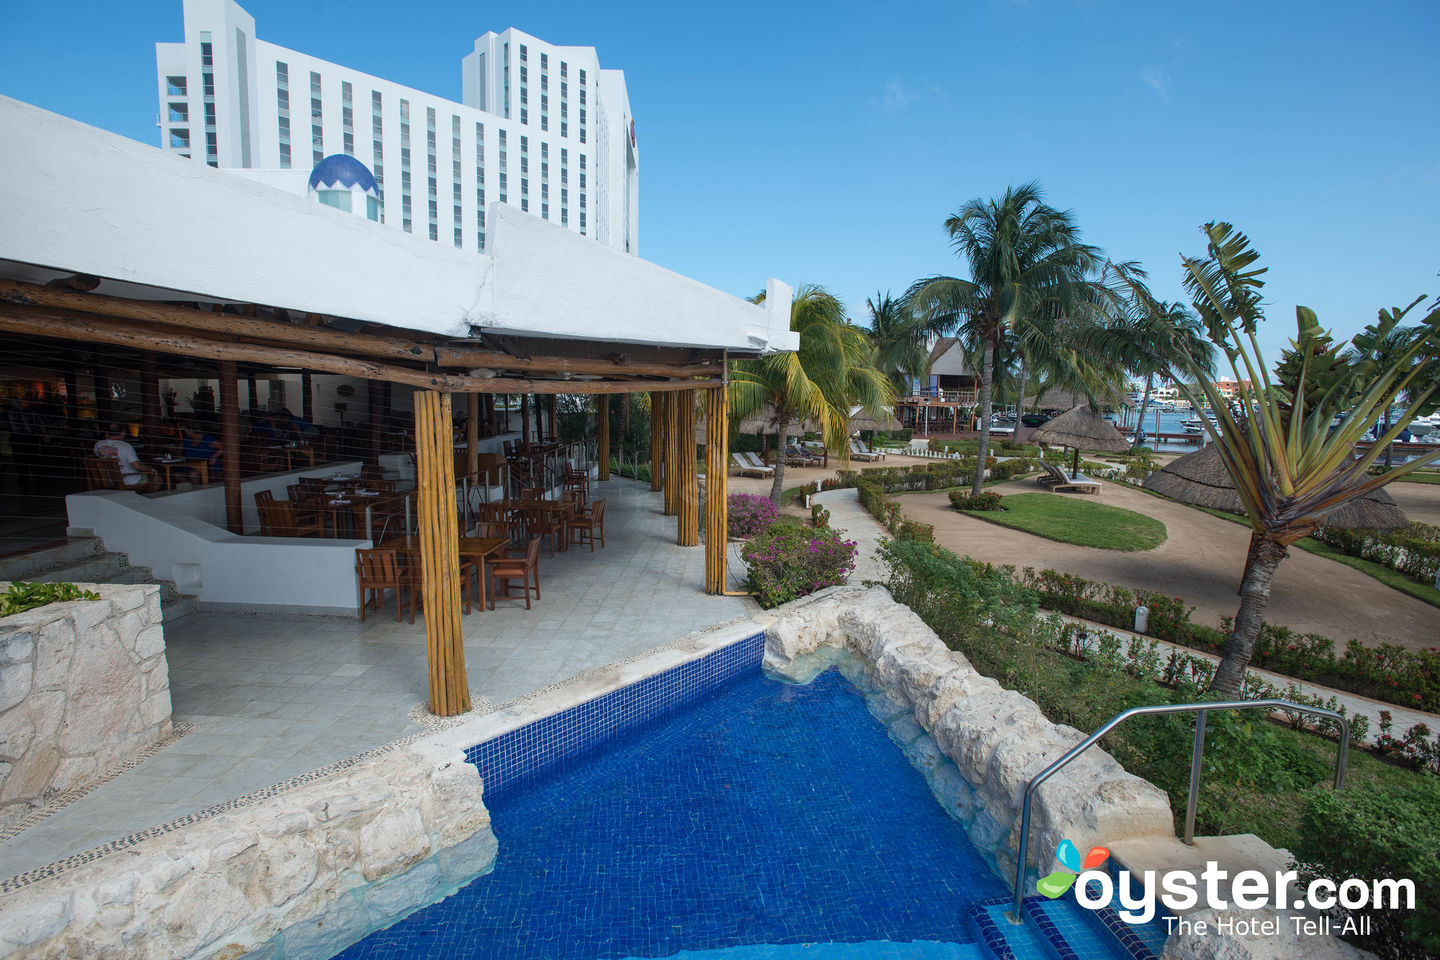 Sunset Marina Resort & Yacht Club: Luxury on the Water